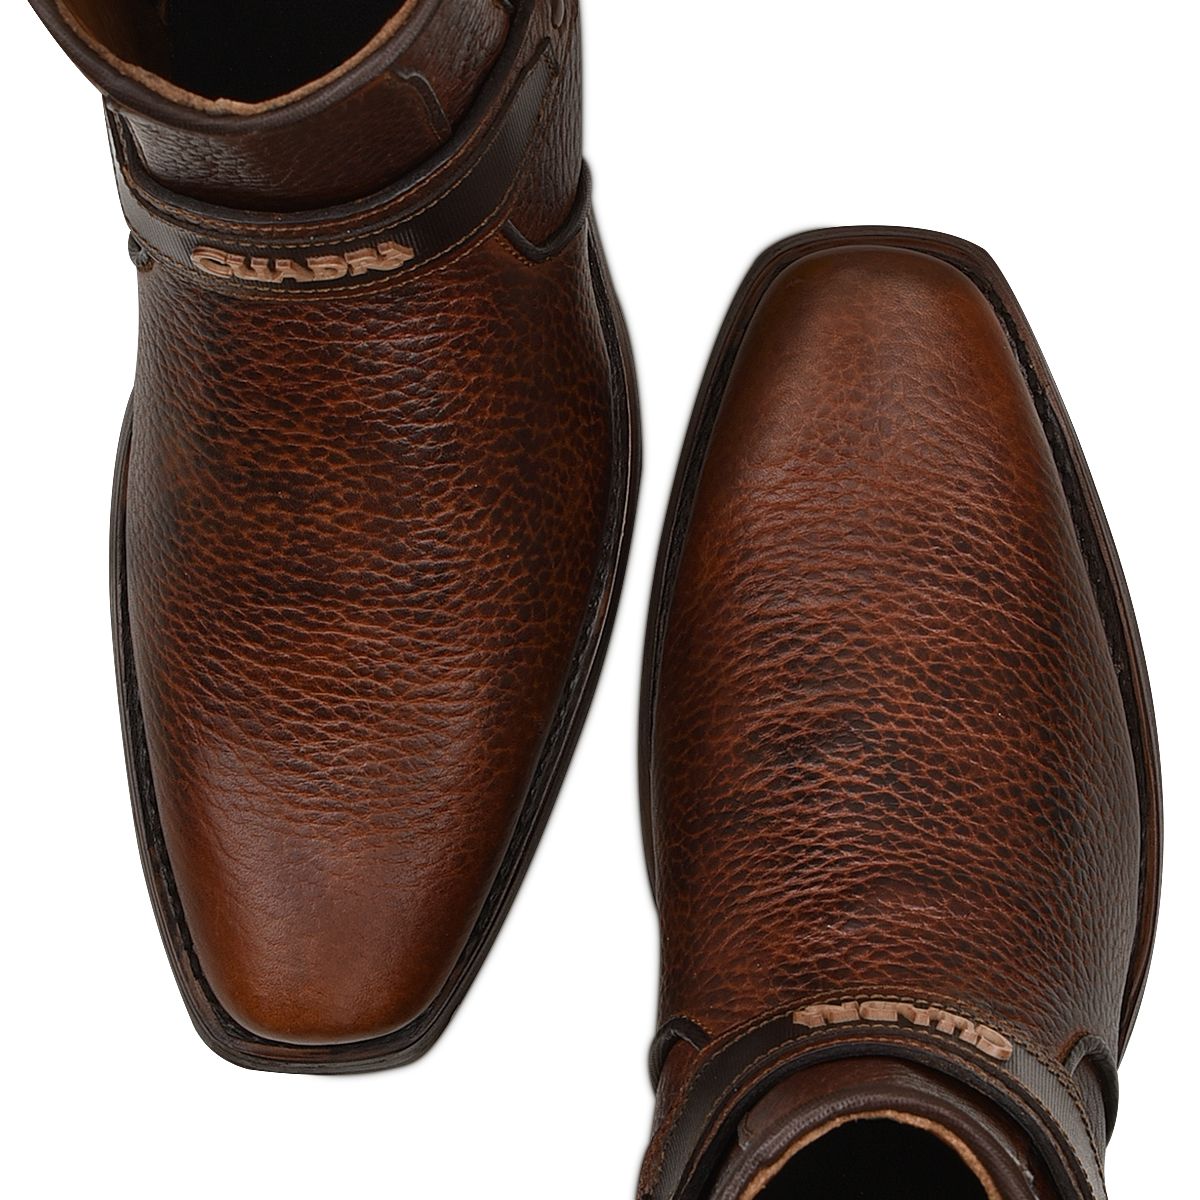 1J2LRS - Cuadra brown fashion cowboy cowhide ankle boots for men.-CUADRA-Kuet-Cuadra-Boots